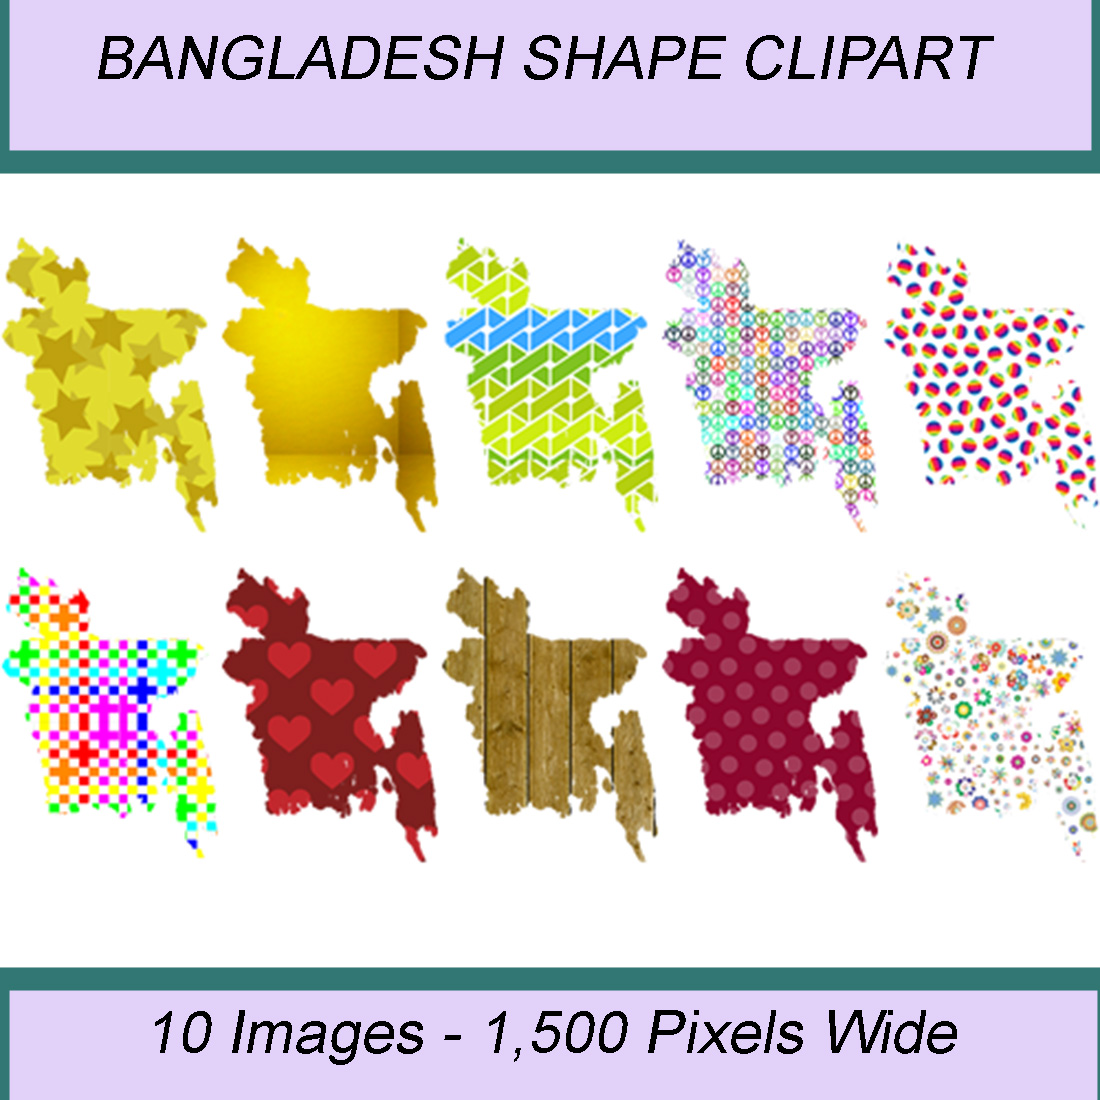 BANGLADESH SHAPE CLIPART ICONS cover image.